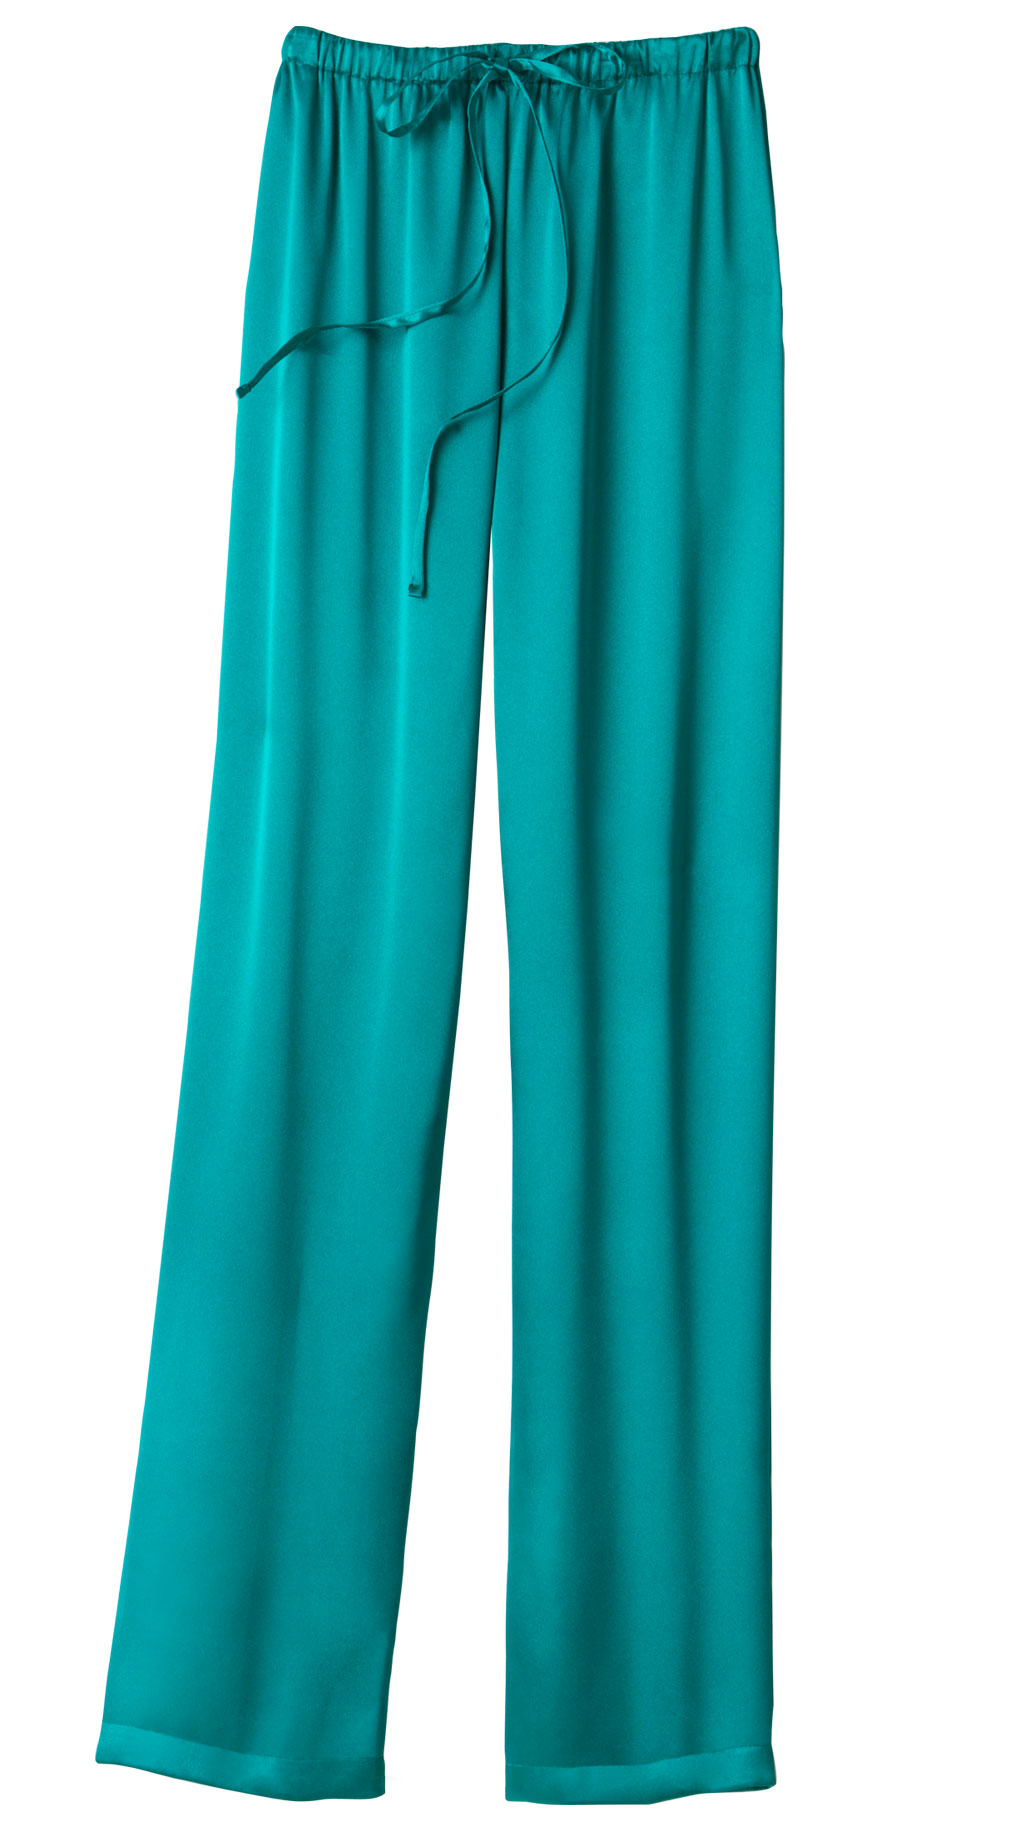 Buy AMYDUS Plus Size Women Pajama/Lounge Pants, Soft Fabric, 2 Side  Pockets